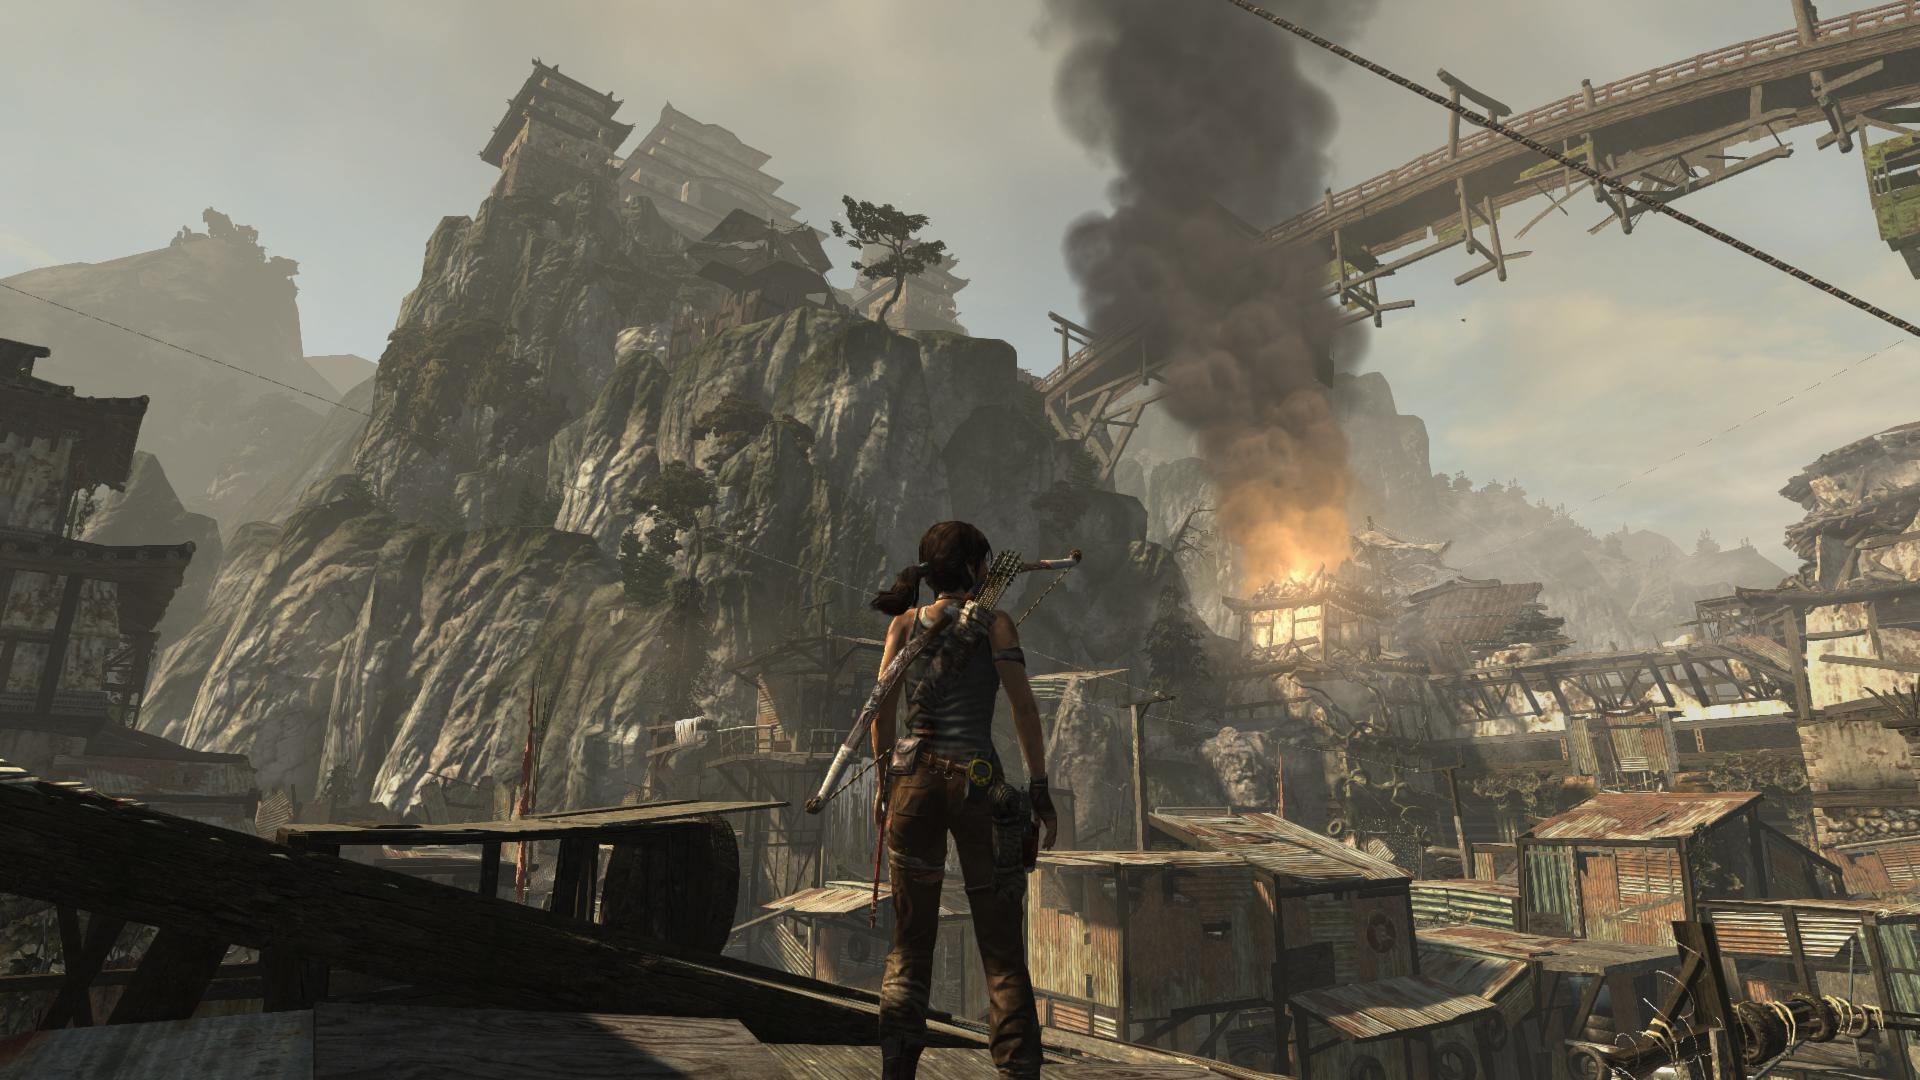 Игра том р. Томб Райдер 2013 геймплей. Tomb Raider 2013 геймплей. Tomb Raider 2013 Gameplay. Tomb Raider игра 2013 геймплей.